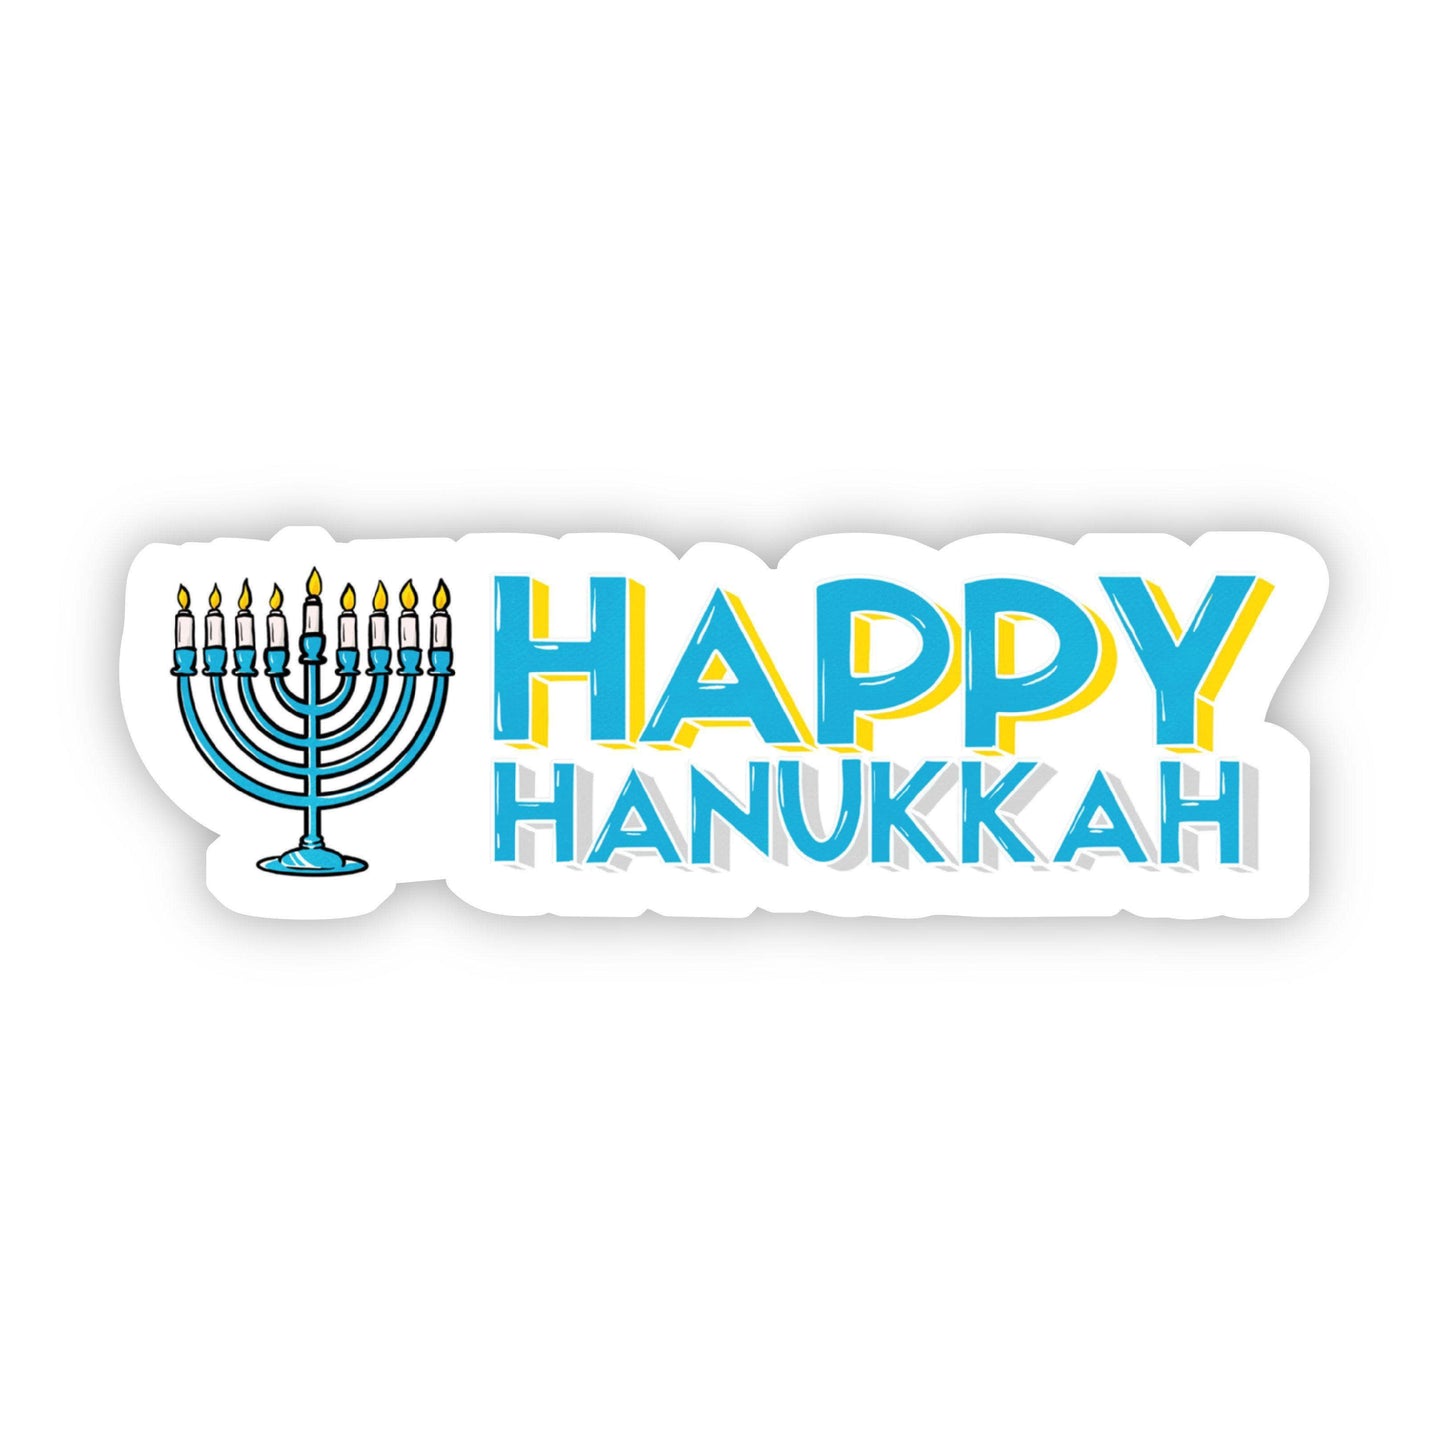 Big Moods - Happy Hanukkah Sticker with Menorah